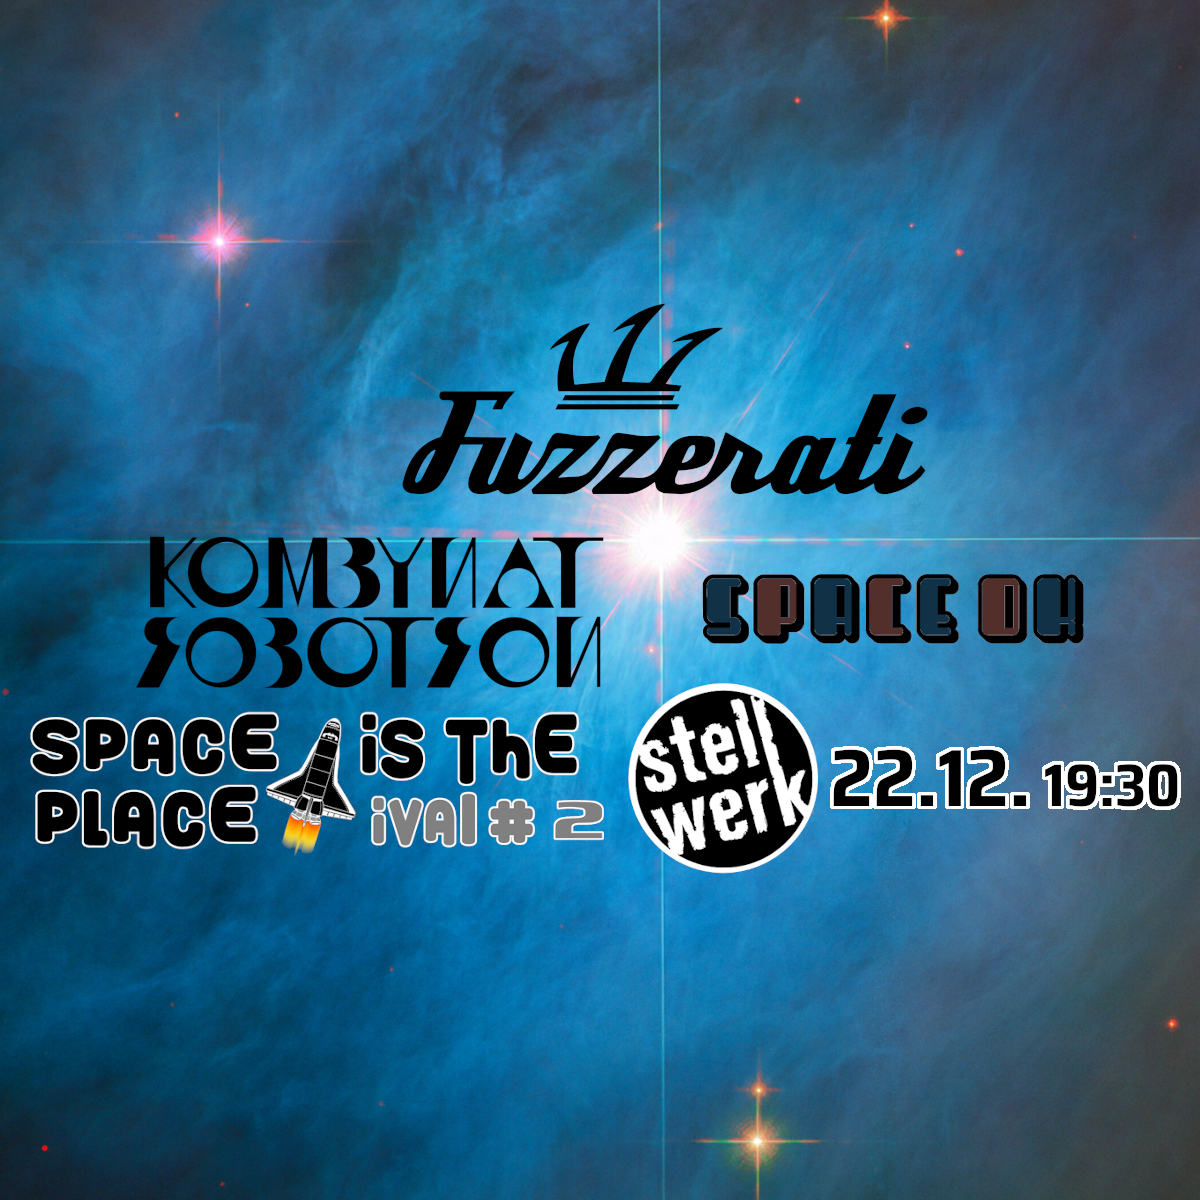 20231222   Stellwerk   Fuzzerati KombynatRobotron SpaceOK   FB Event 2 SPACE IS THE PLACE ival #2 feat.: FUZZERATI, KOMBYNAT ROBOTRON, SPACE OK